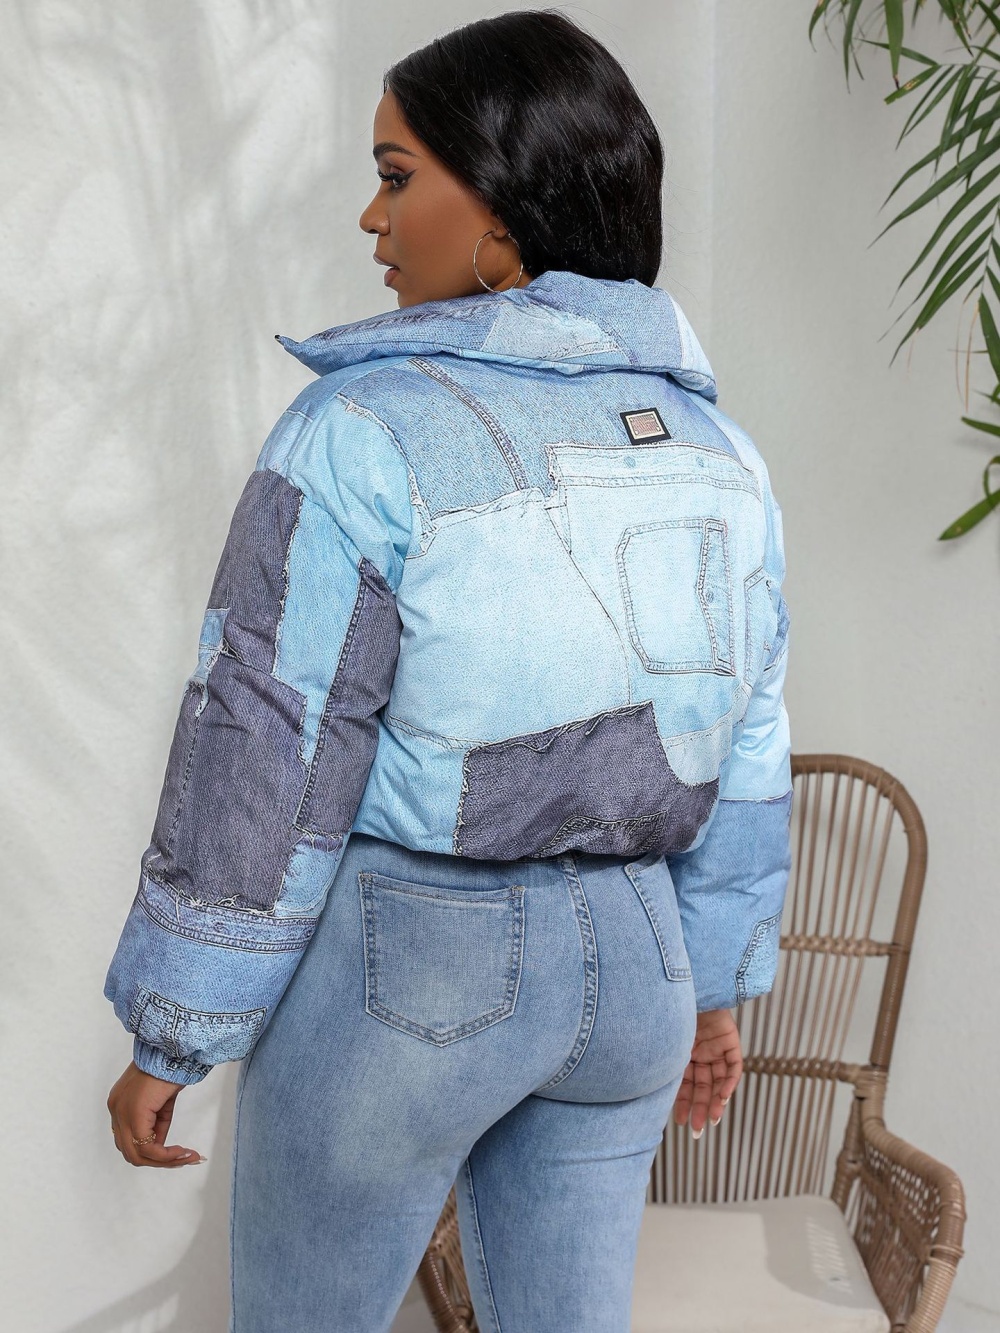 Fashion denim jacket printing cotton coat for women